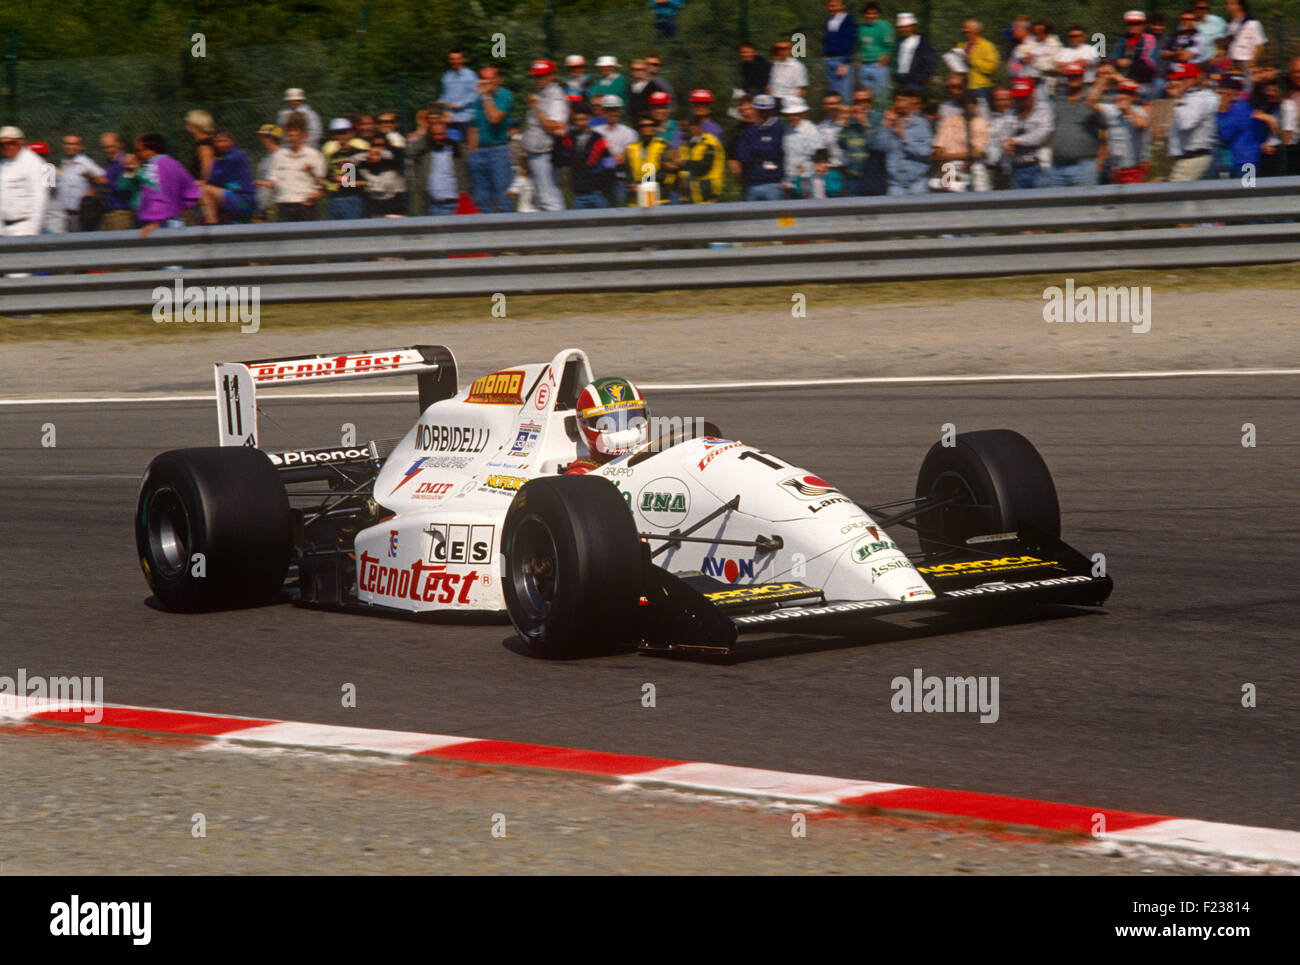 Emanuele Naspetti racing in Formula 3000 in the 1990s. Stock Photo